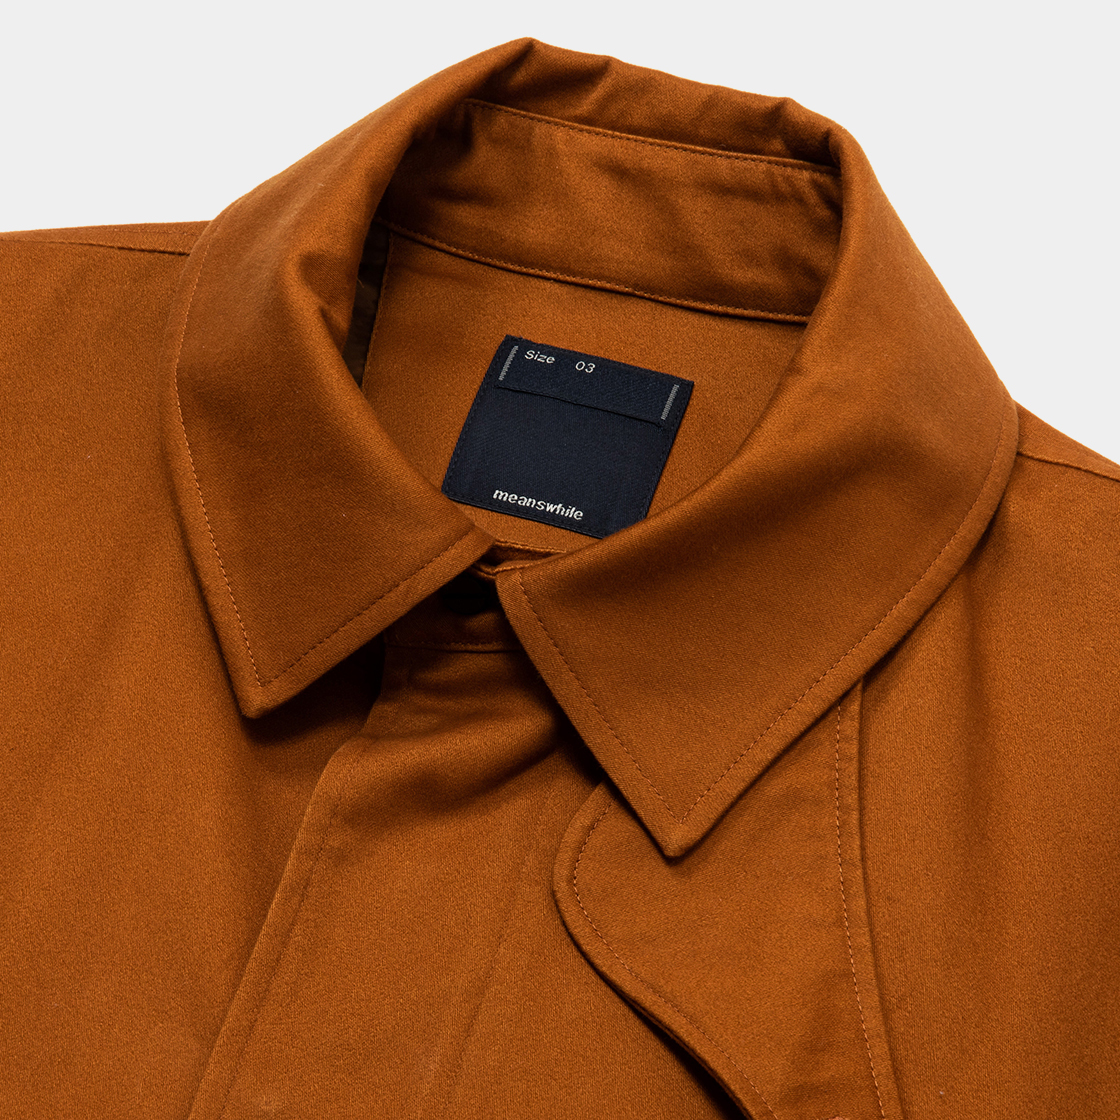 Satin Flannel Over Short Coat / Brown